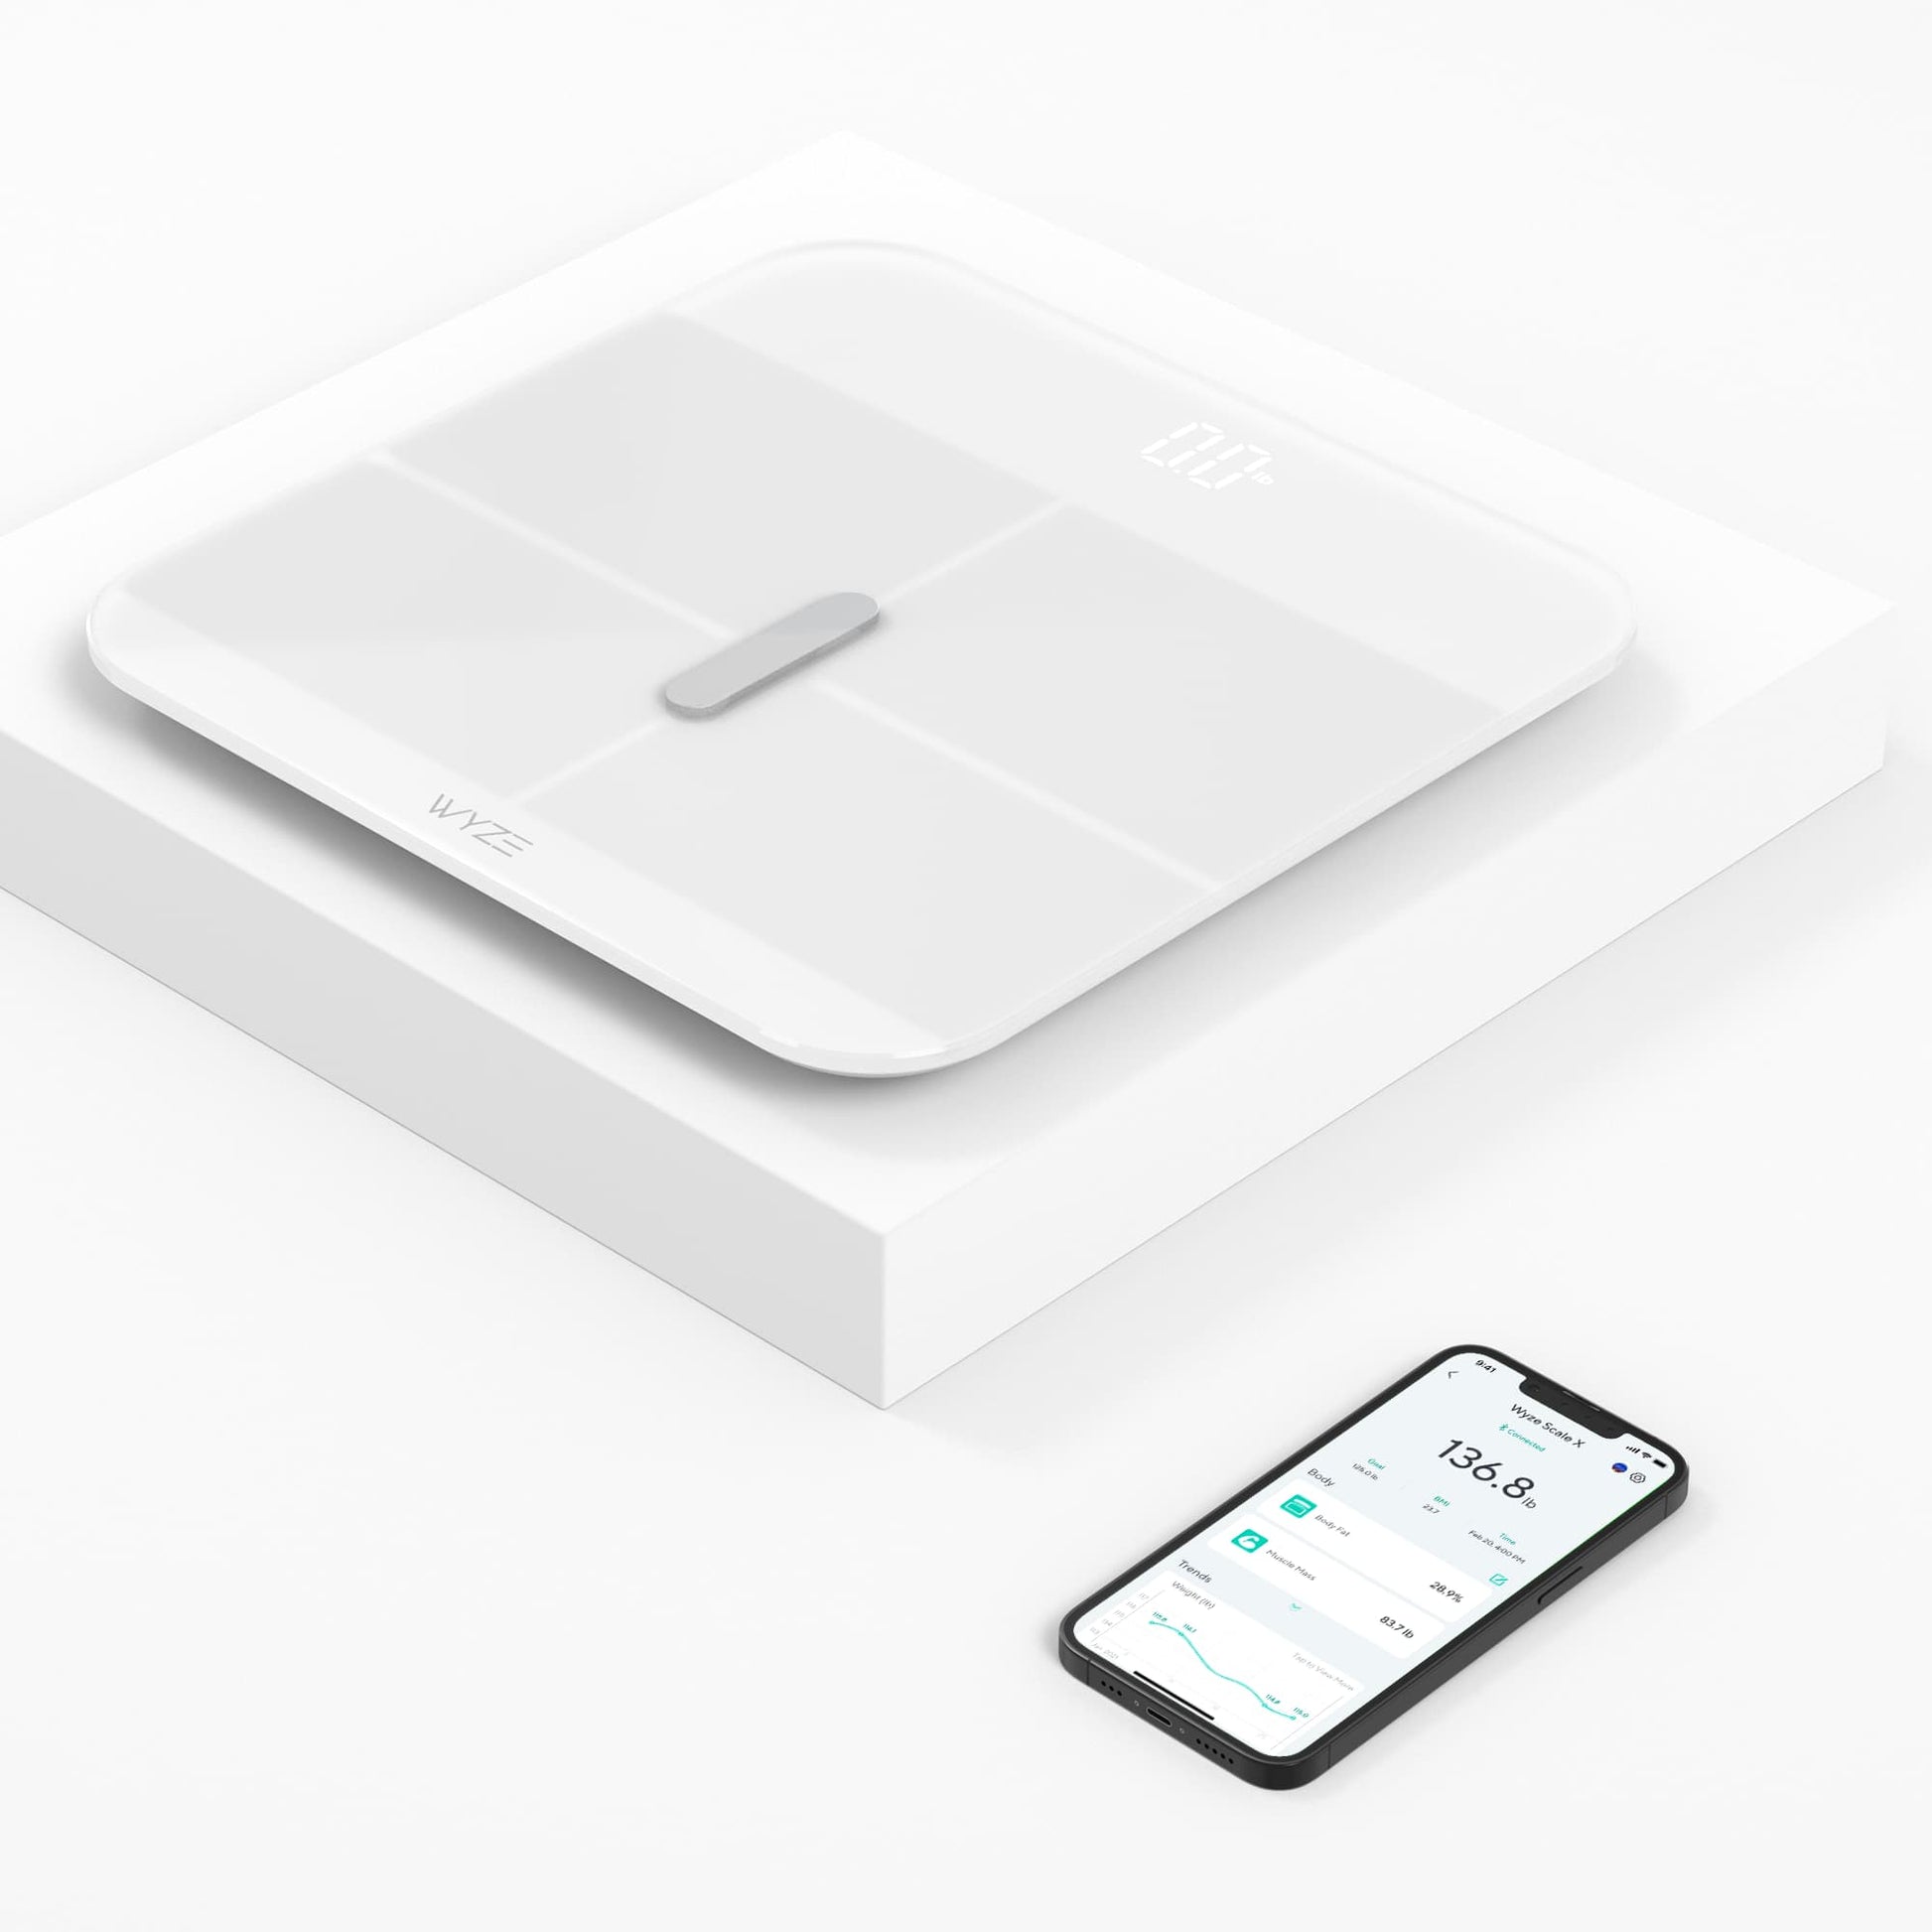  WYZE Smart Scale X for Body Weight, Digital Bathroom